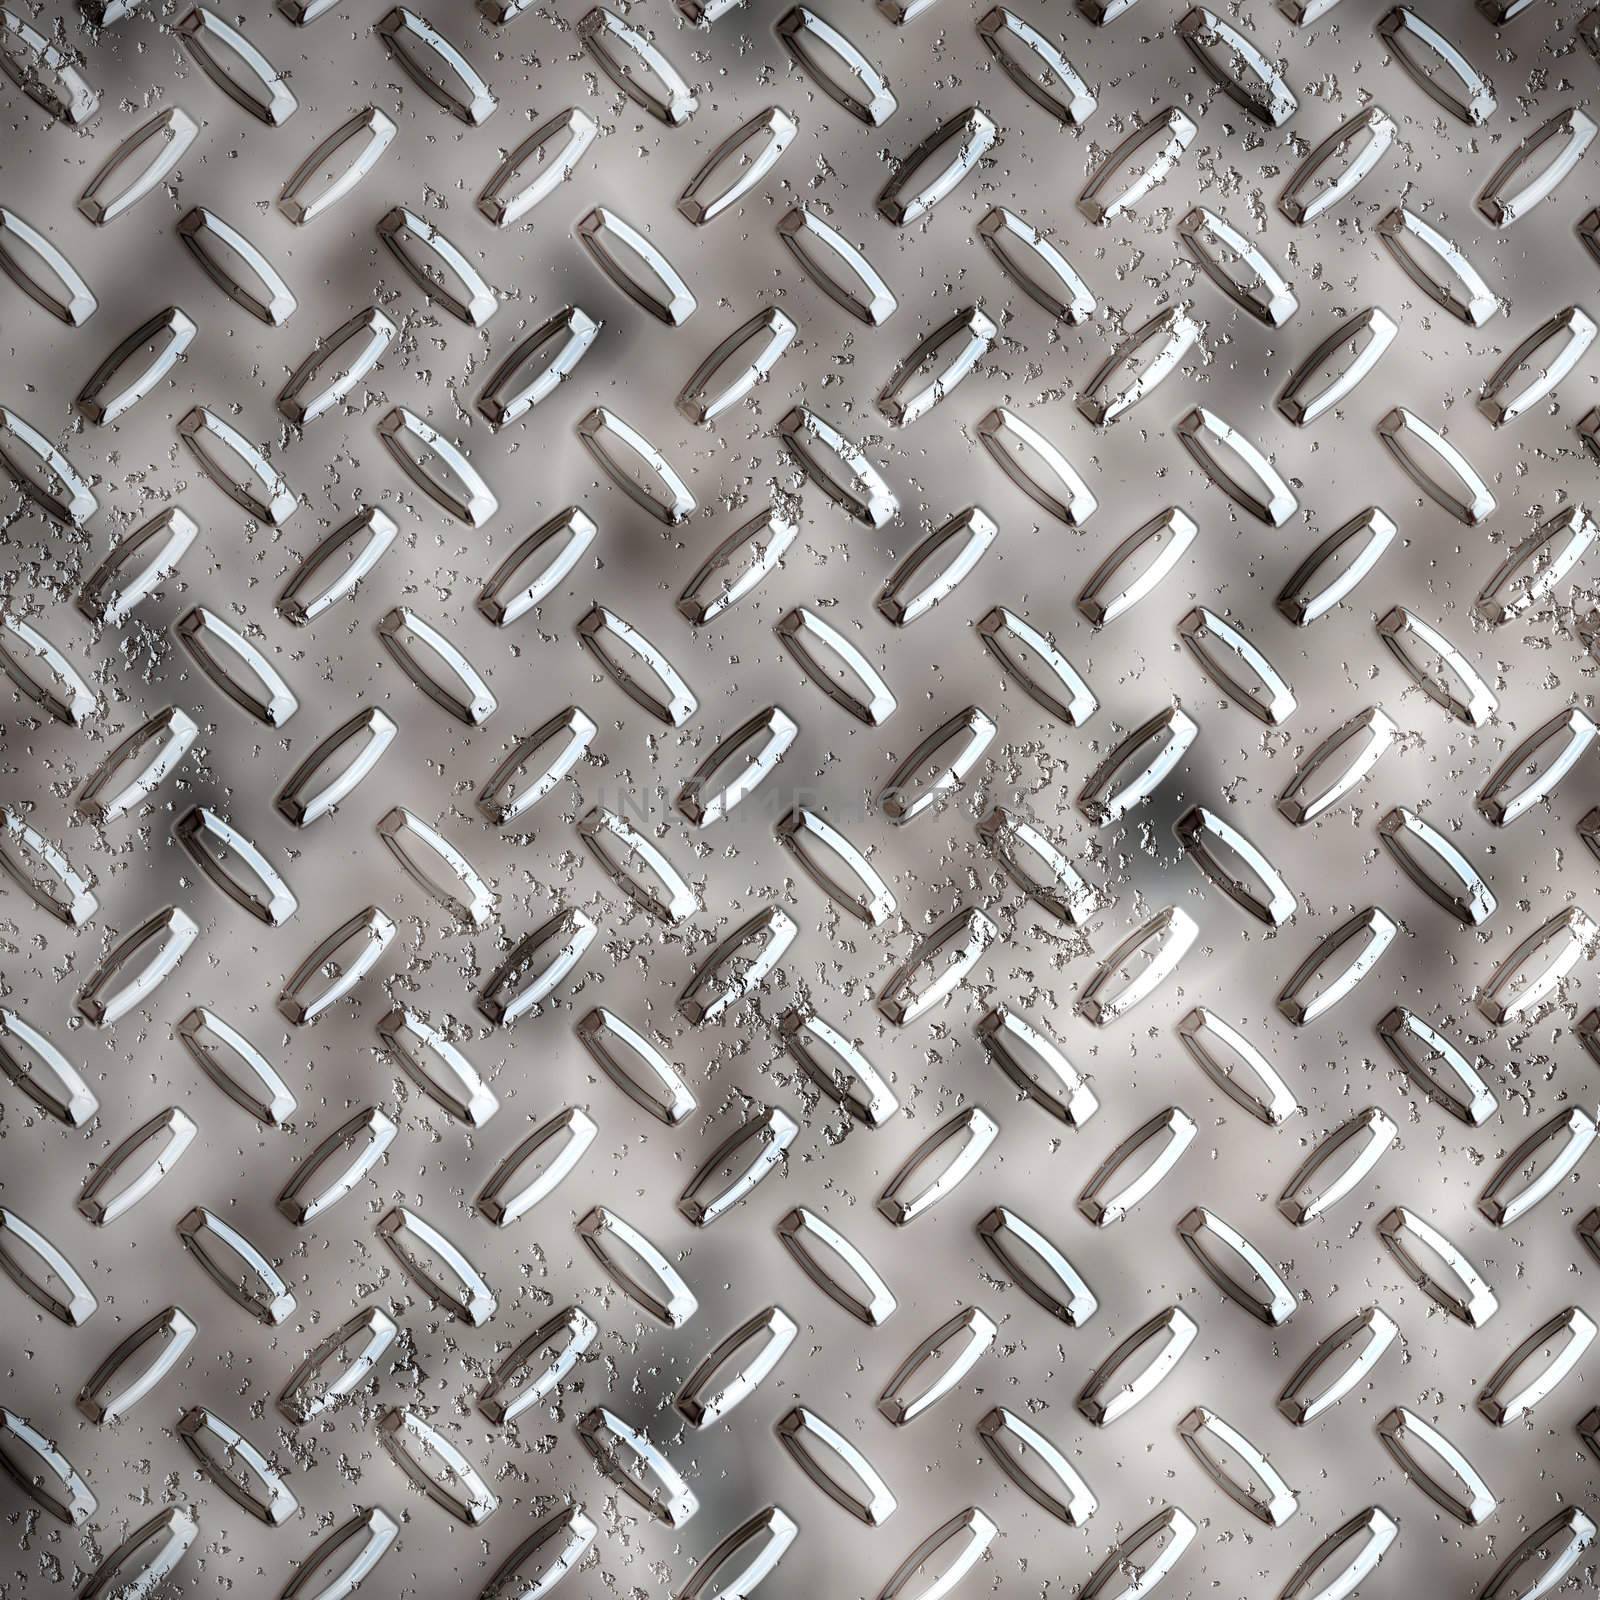 a large sheet of diamond or tread plate metal